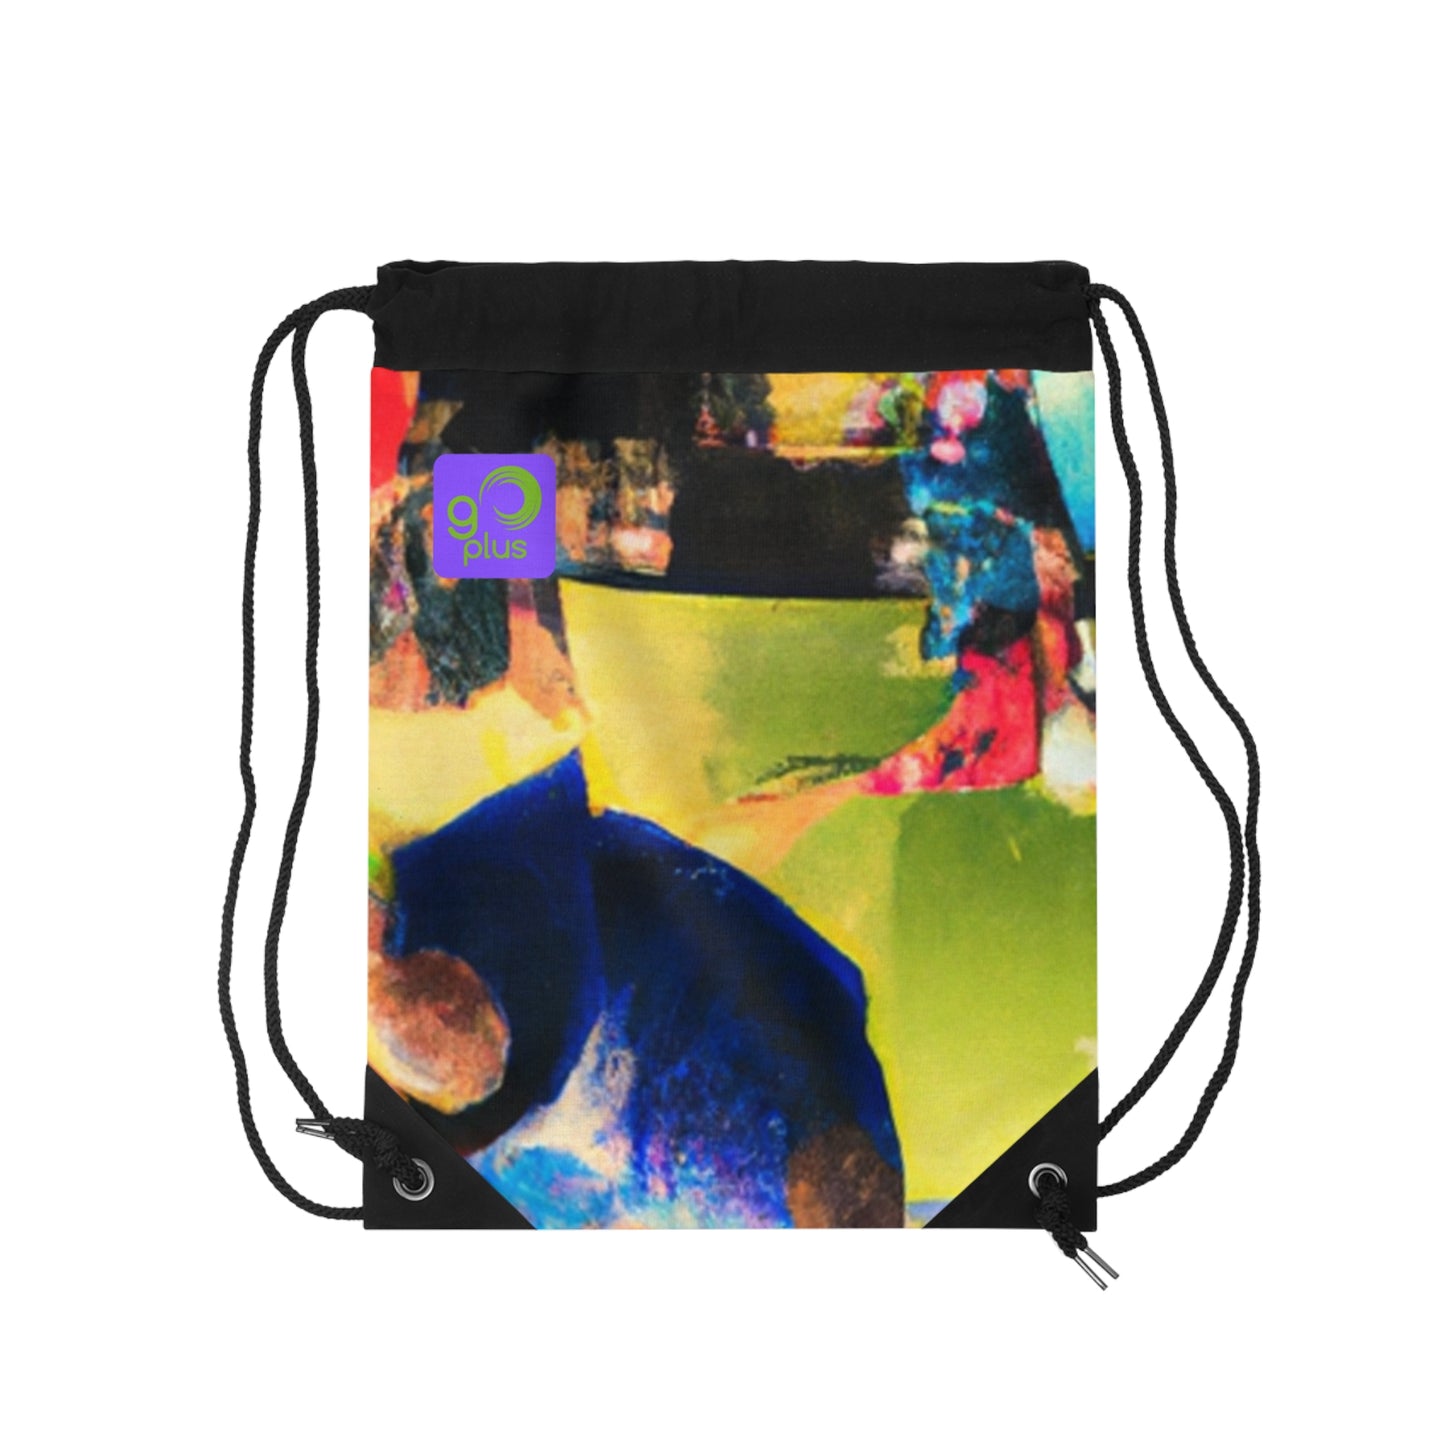 "Sports Passion Composite" - Go Plus Drawstring Bag